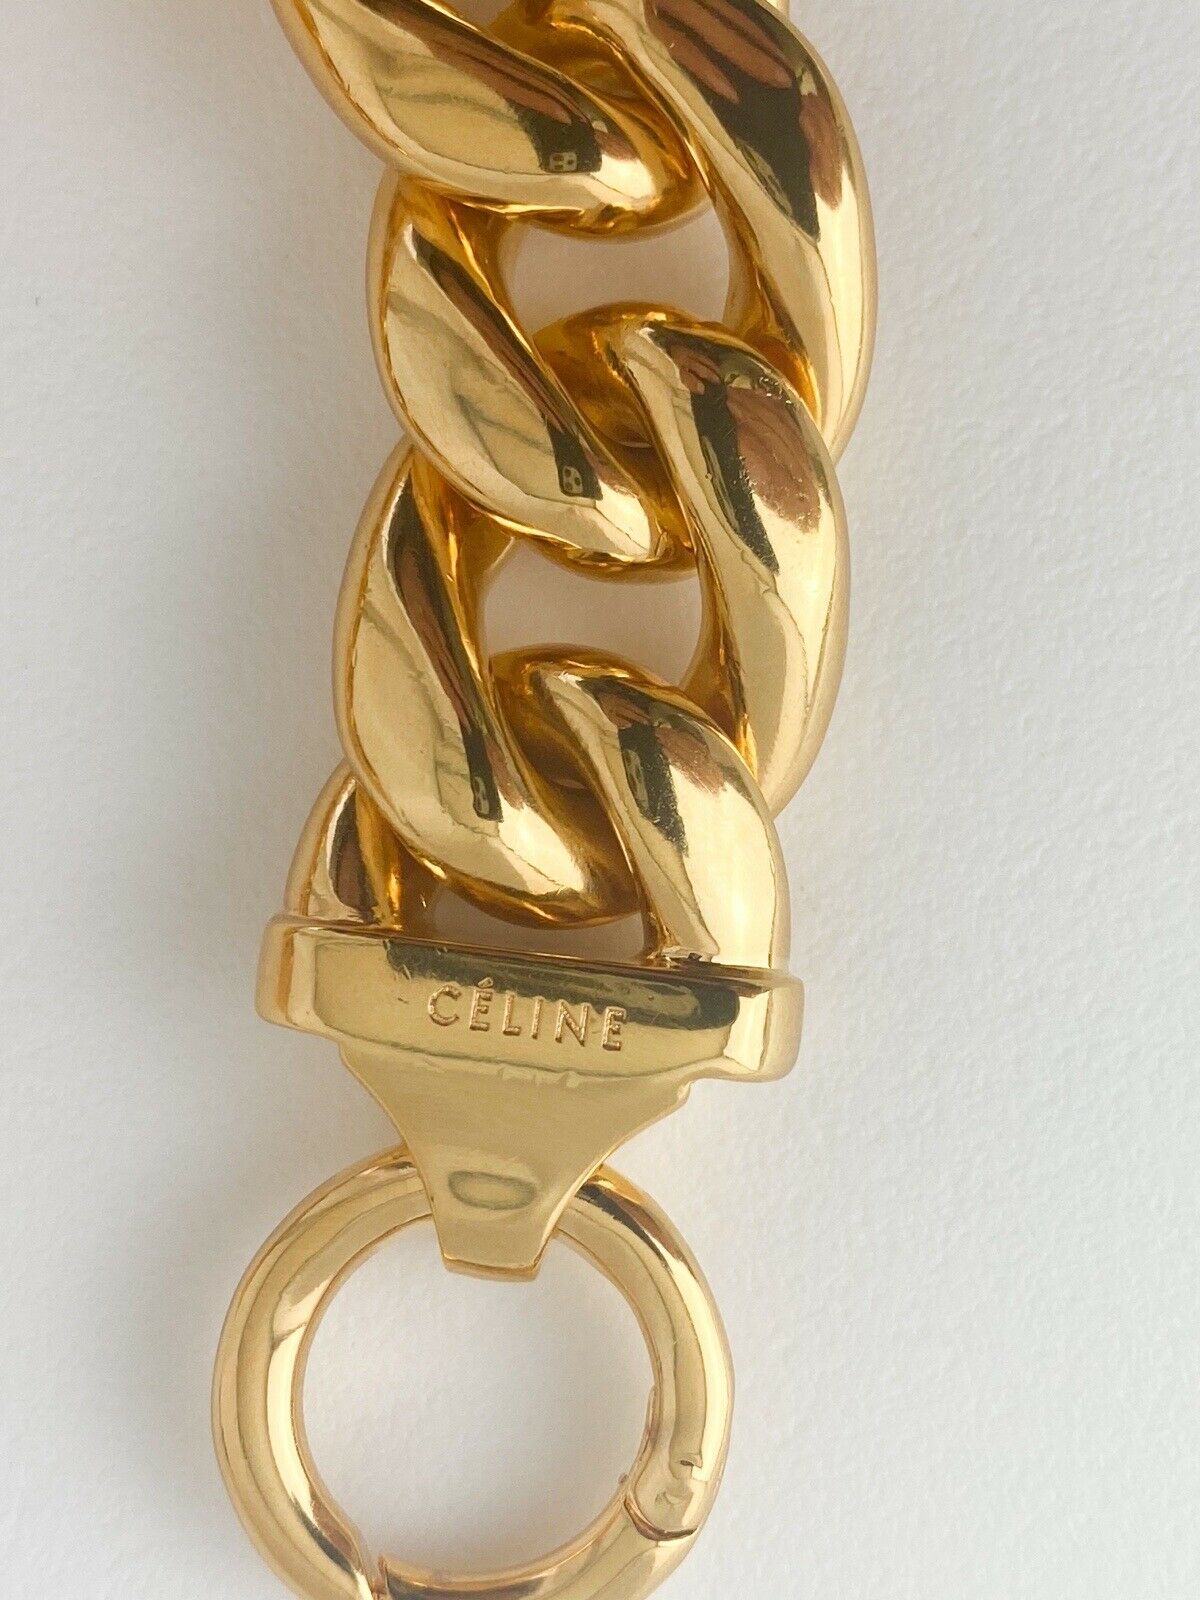 Celine Vintage Blazon Chain Bag Charm Bracelet - Gold-Tone Metal